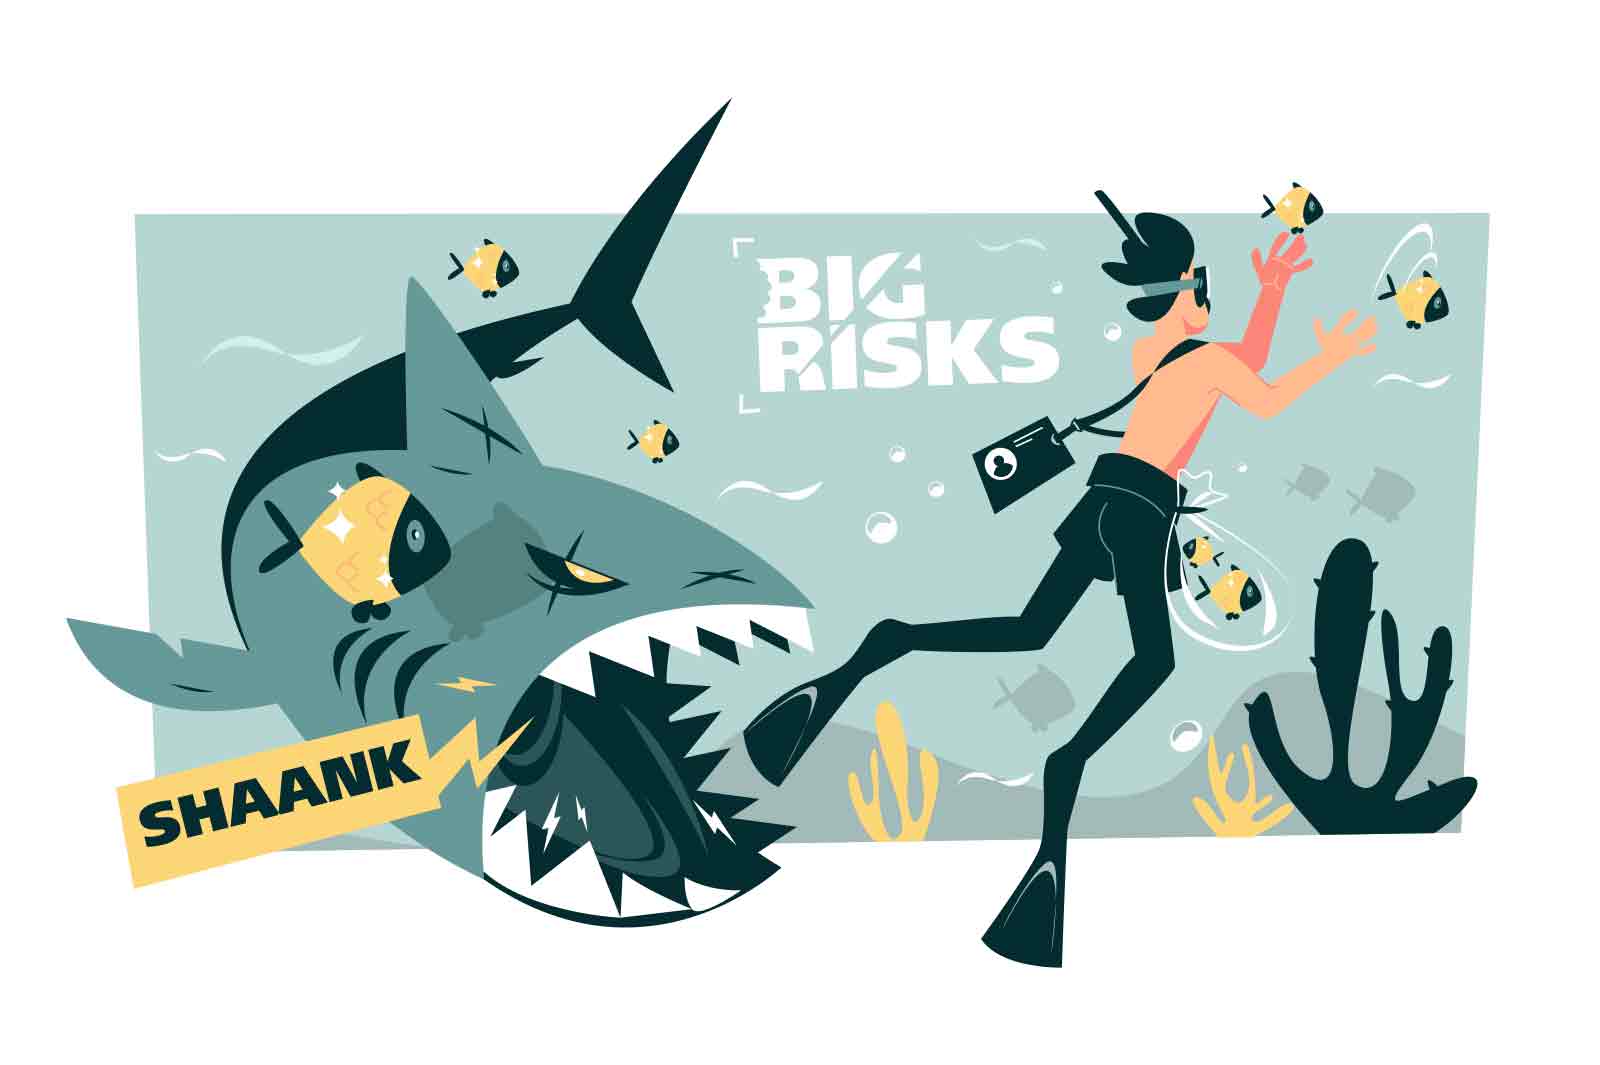 Big risks, danger, extreme leisure or financial situation visualization vector illustration. Business dangers and challenges management